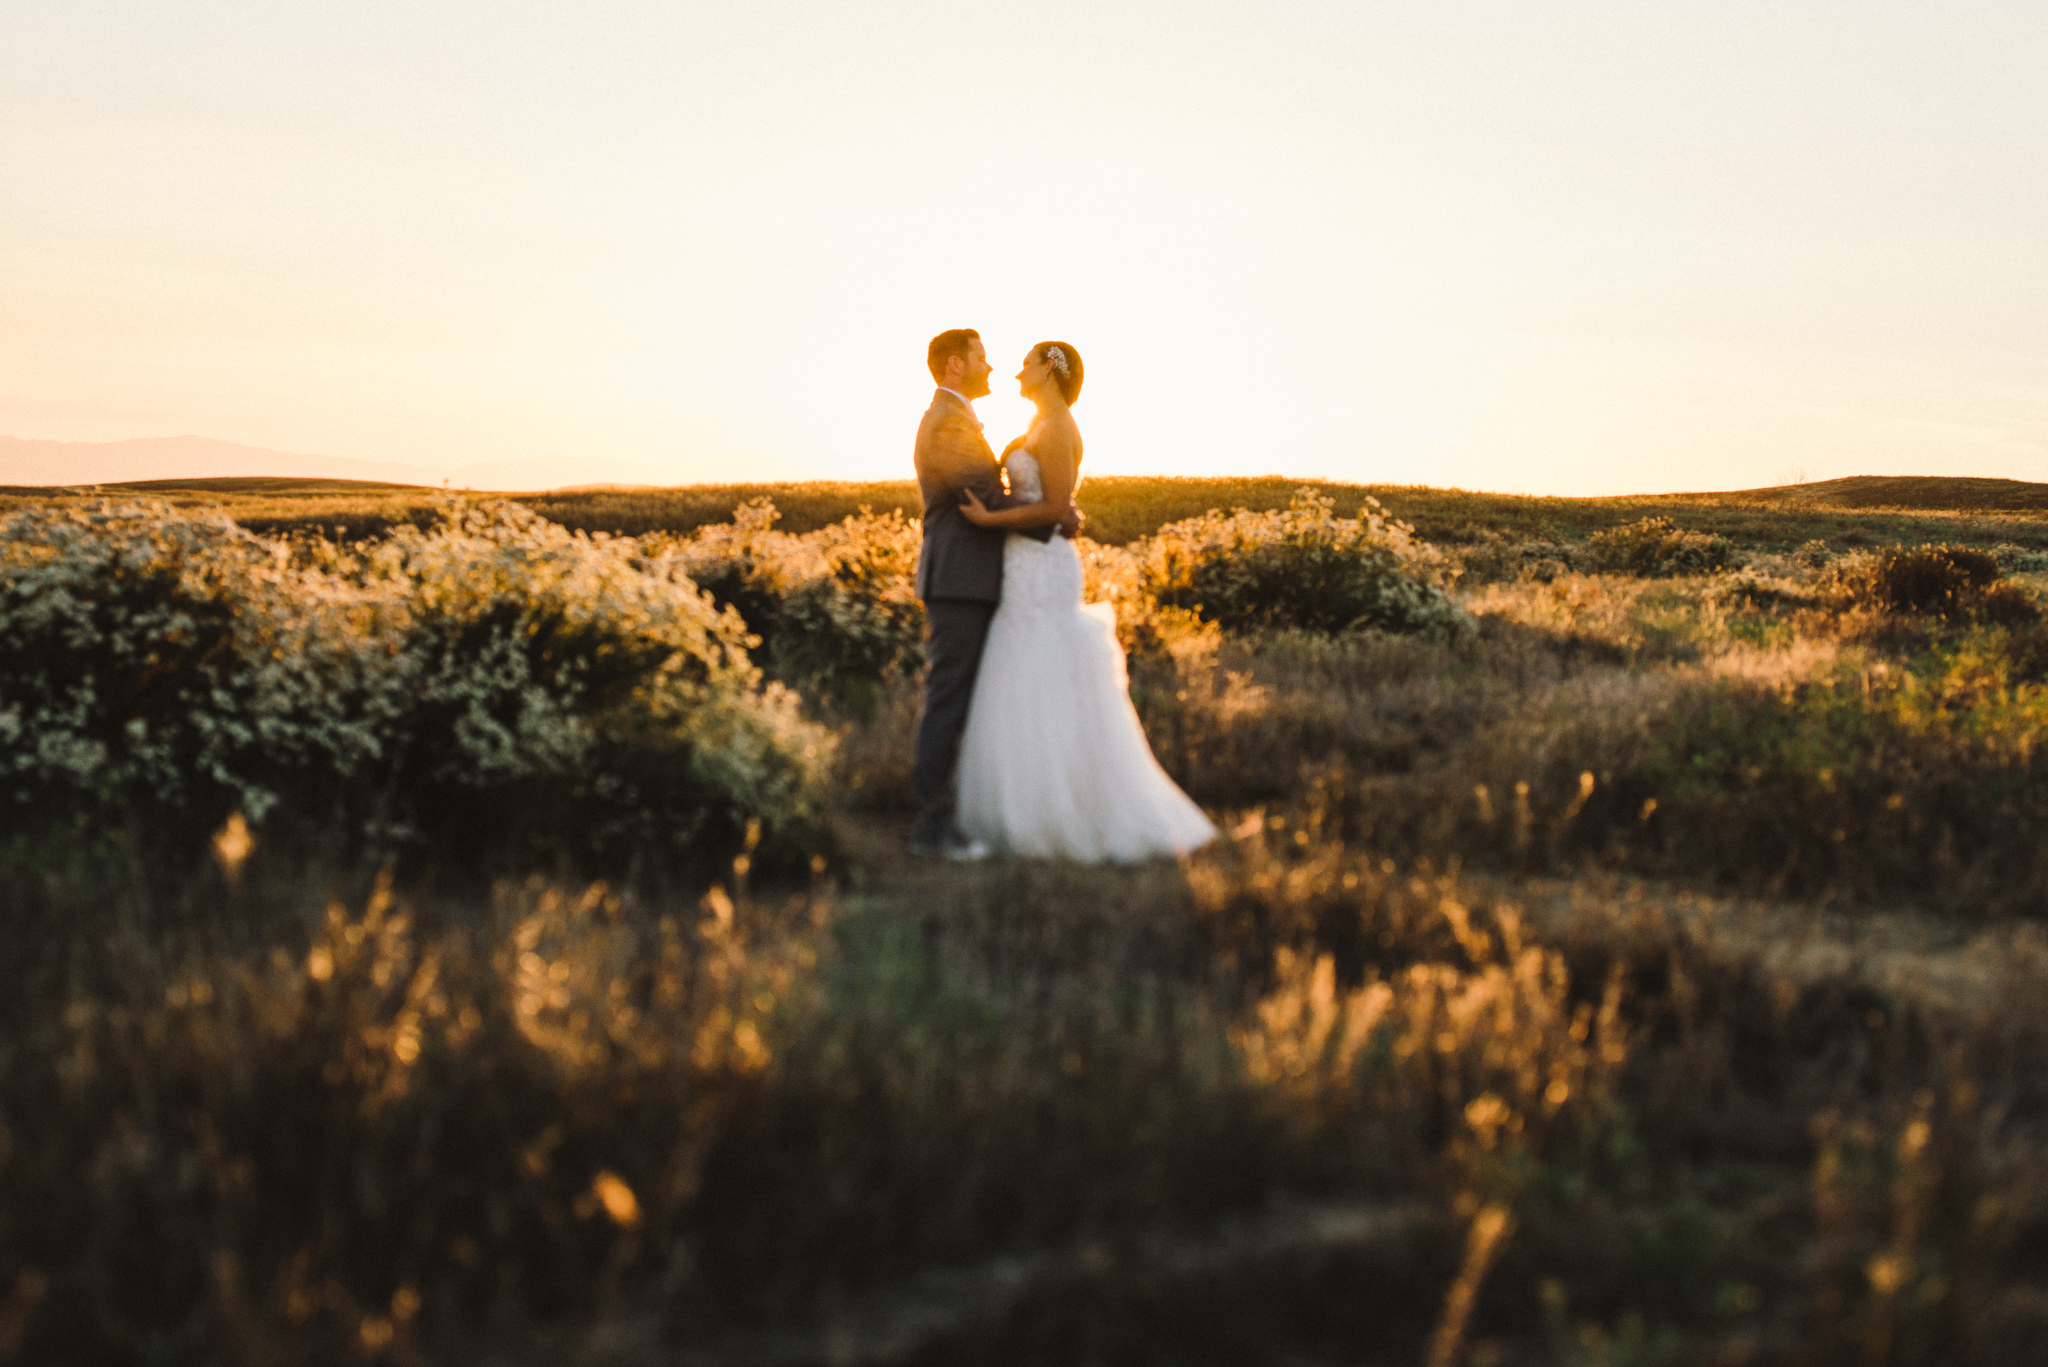 Isaiah & Taylor Photography - Destination Photographers - Temecula Winery Sunset Wedding-11.jpg